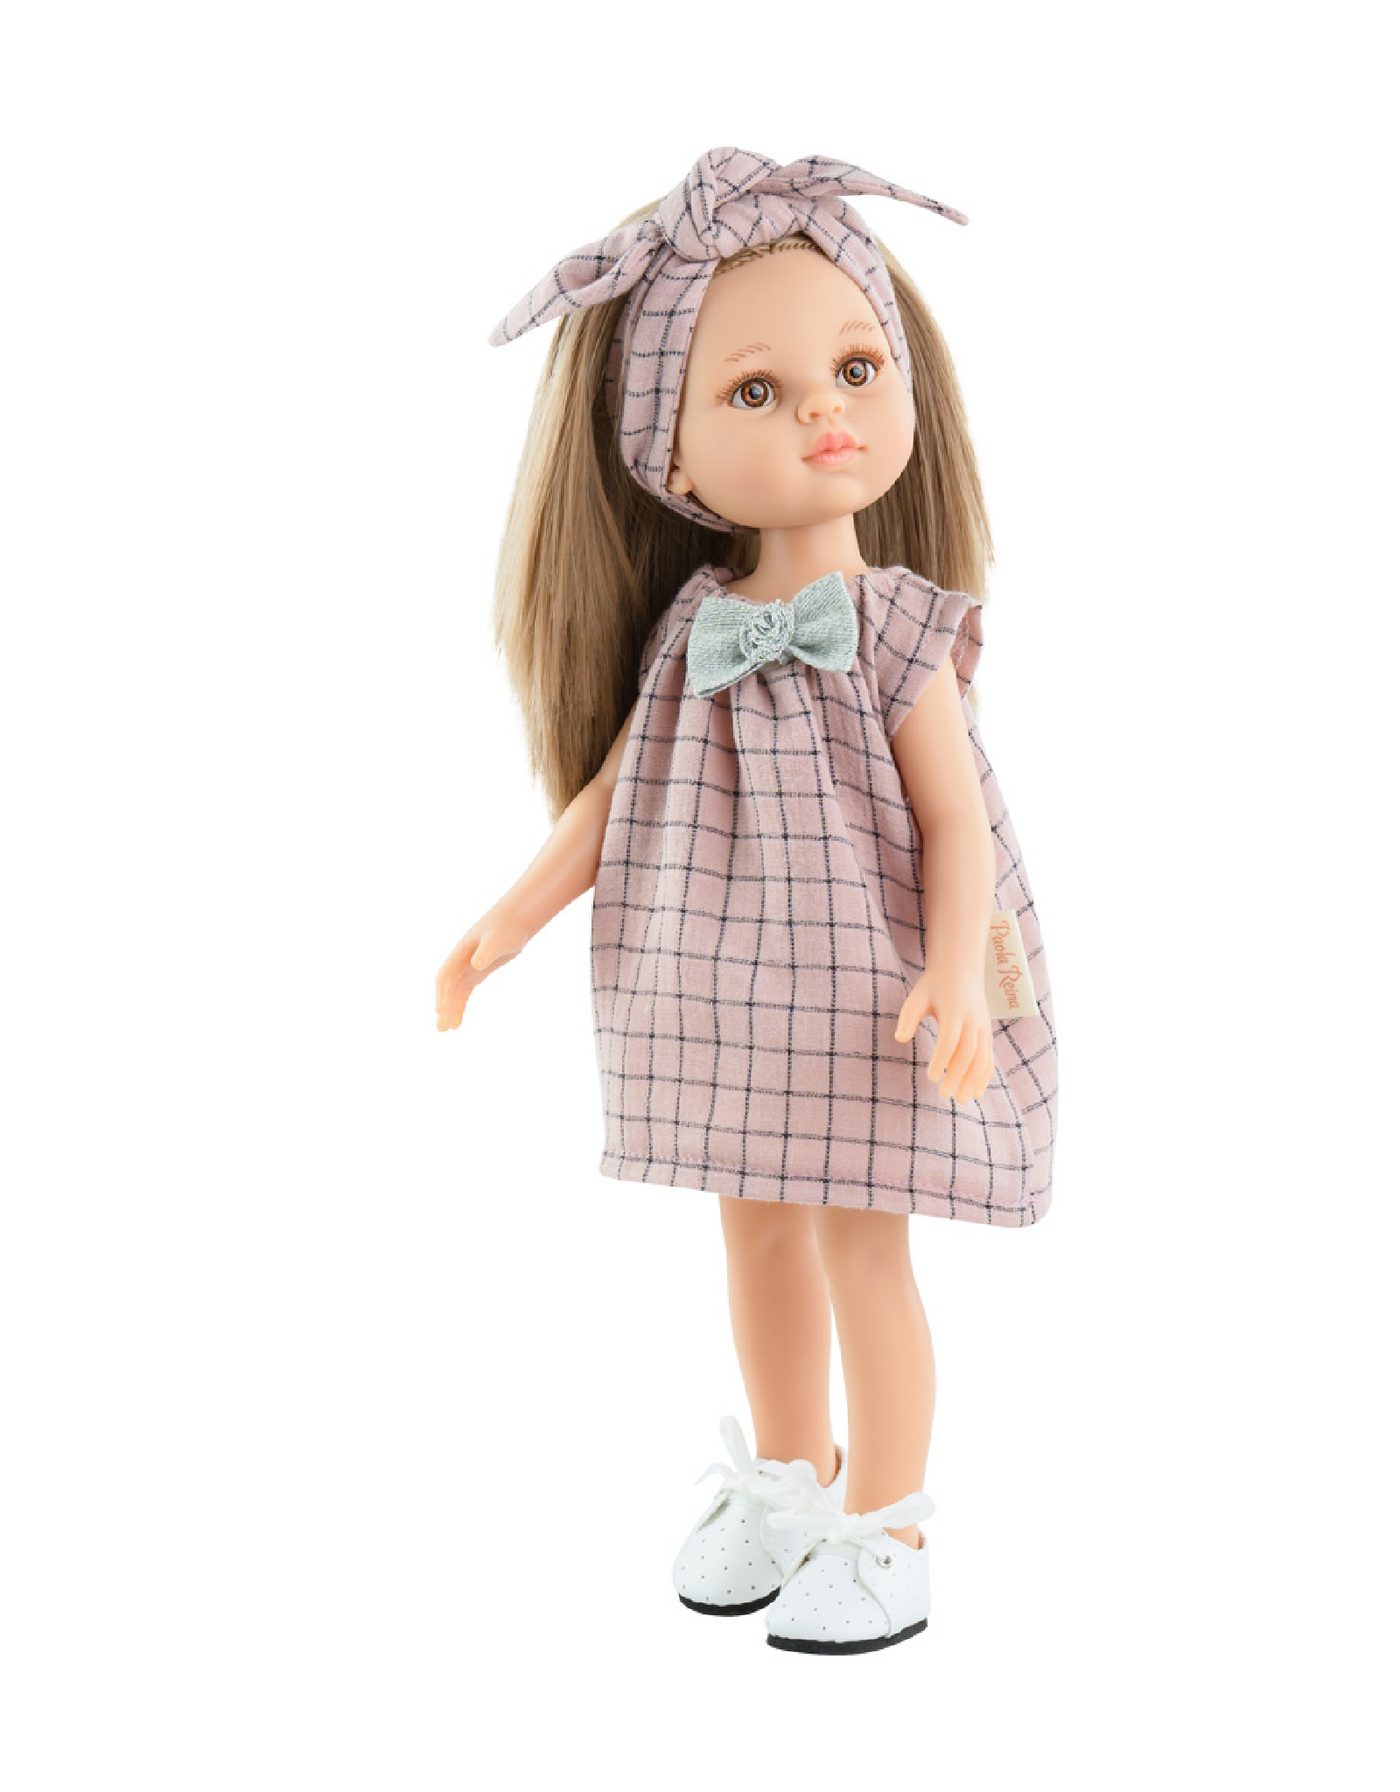 Las Amigas doll - Annie pink dress and headband with checks - Paola Reina